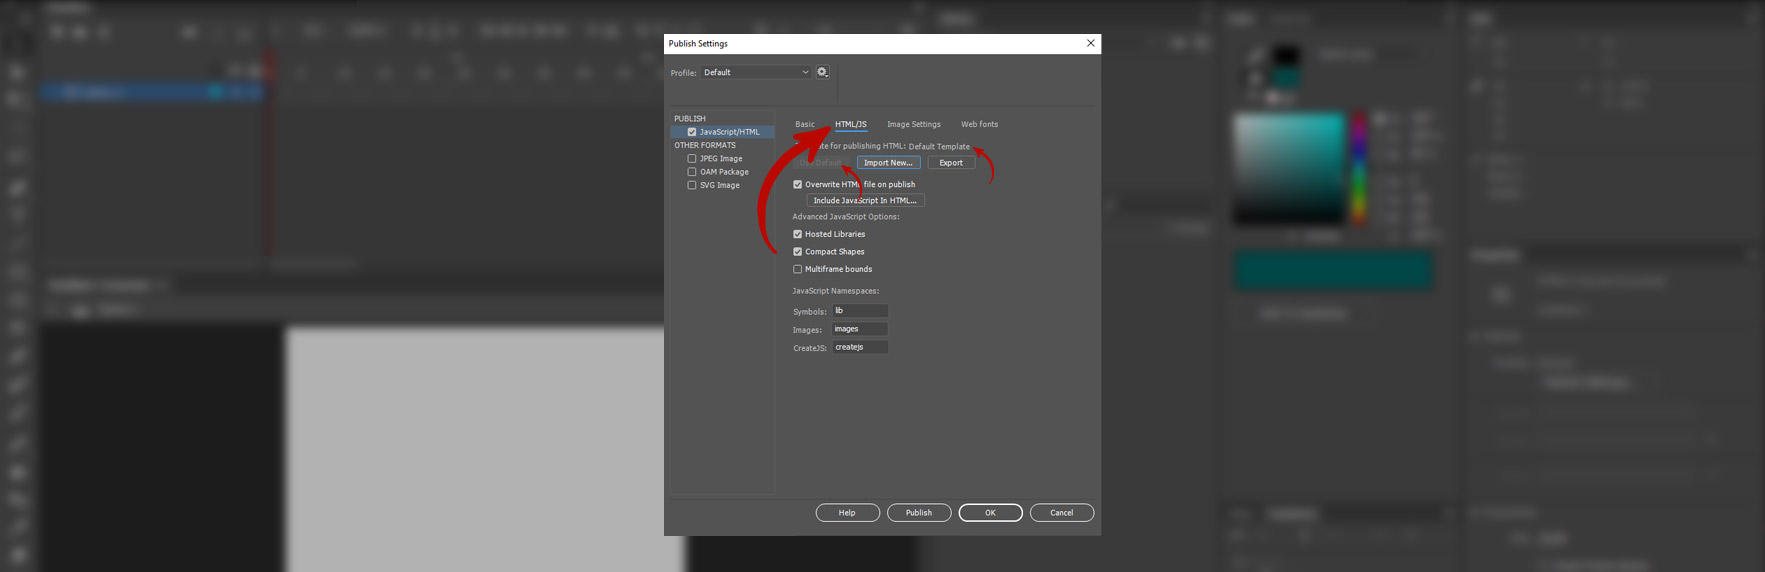 Скриншот программы Adobe Animate. Окно Publish Settings, настройка вкладки HTML/JS